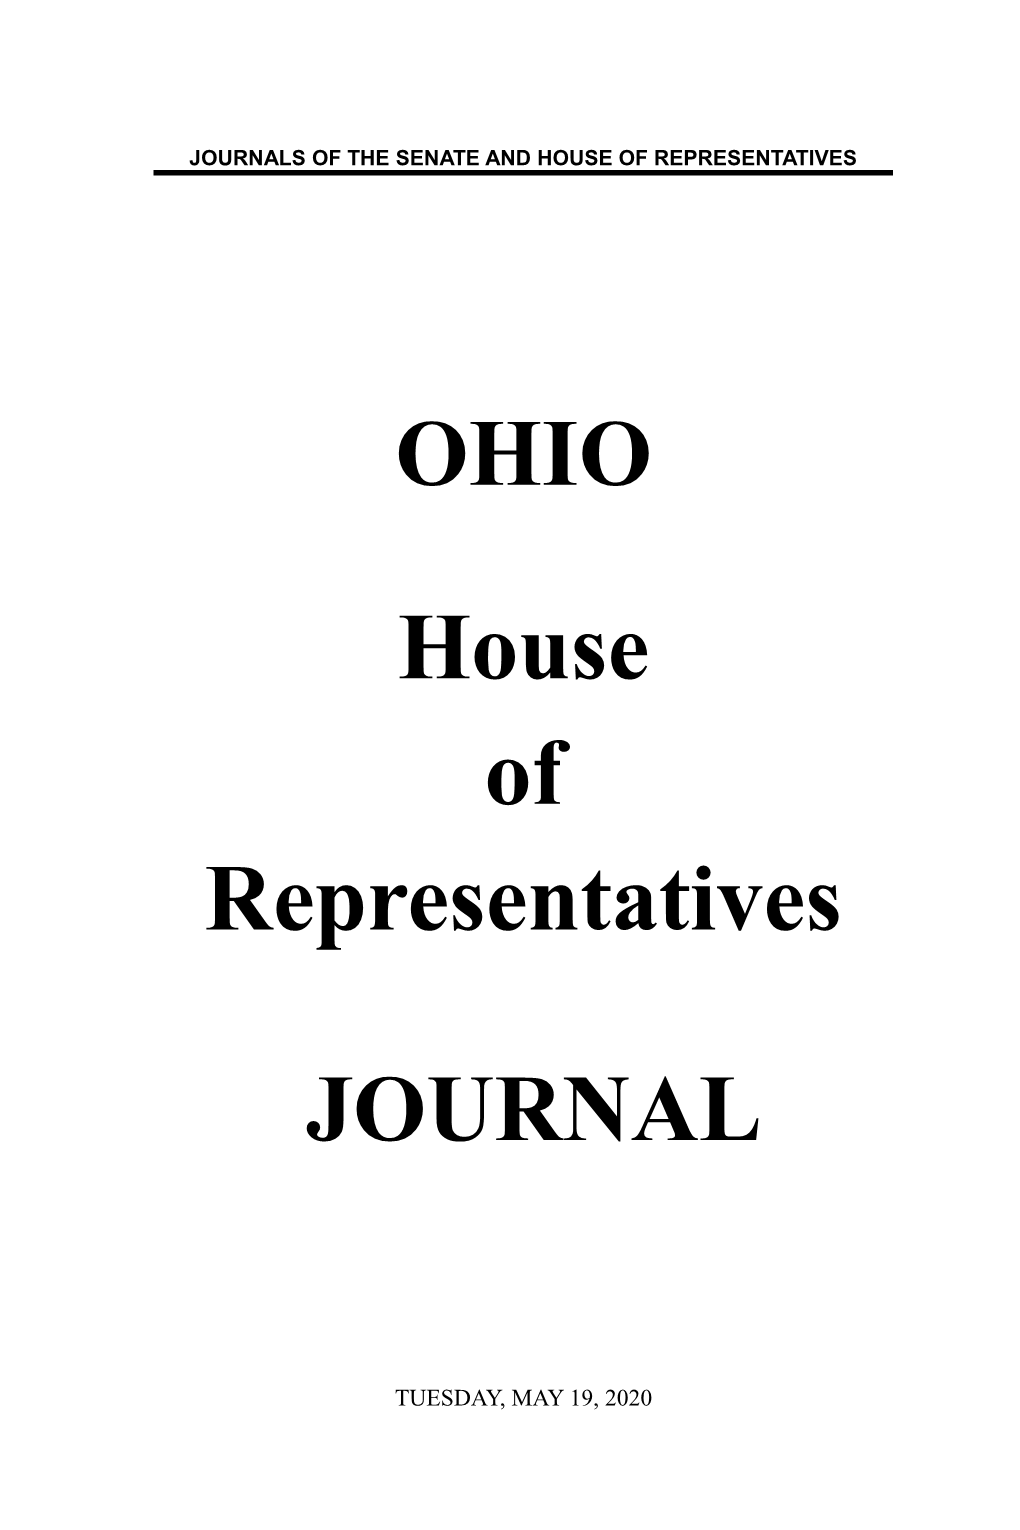 OHIO House of Representatives JOURNAL